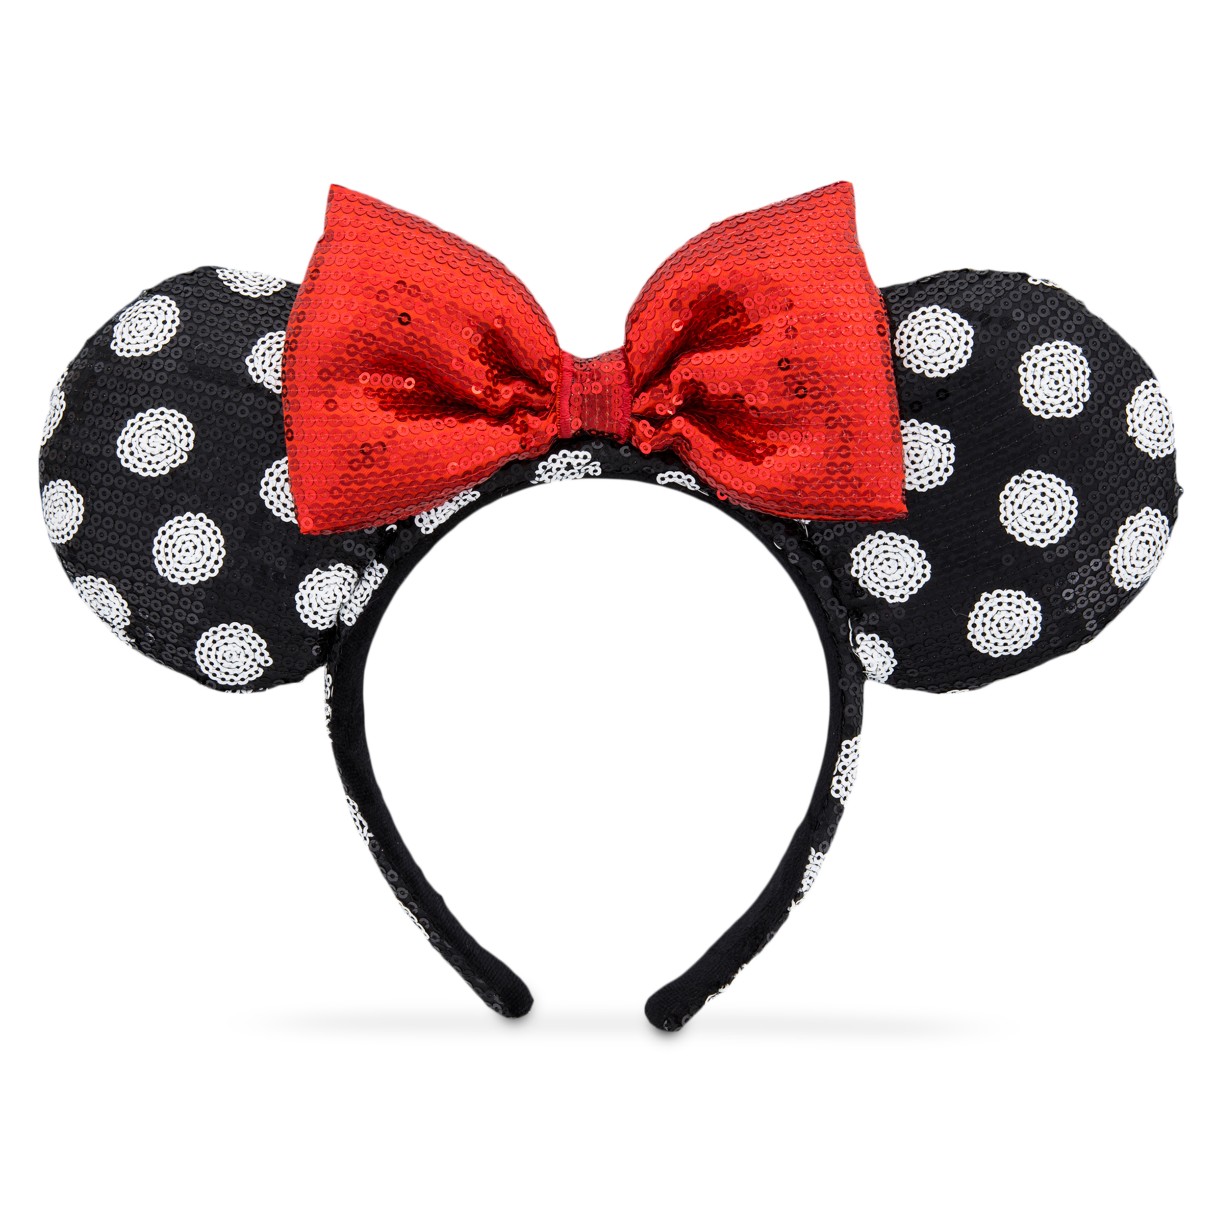 Minnie Mouse Ear Headband – Black and White